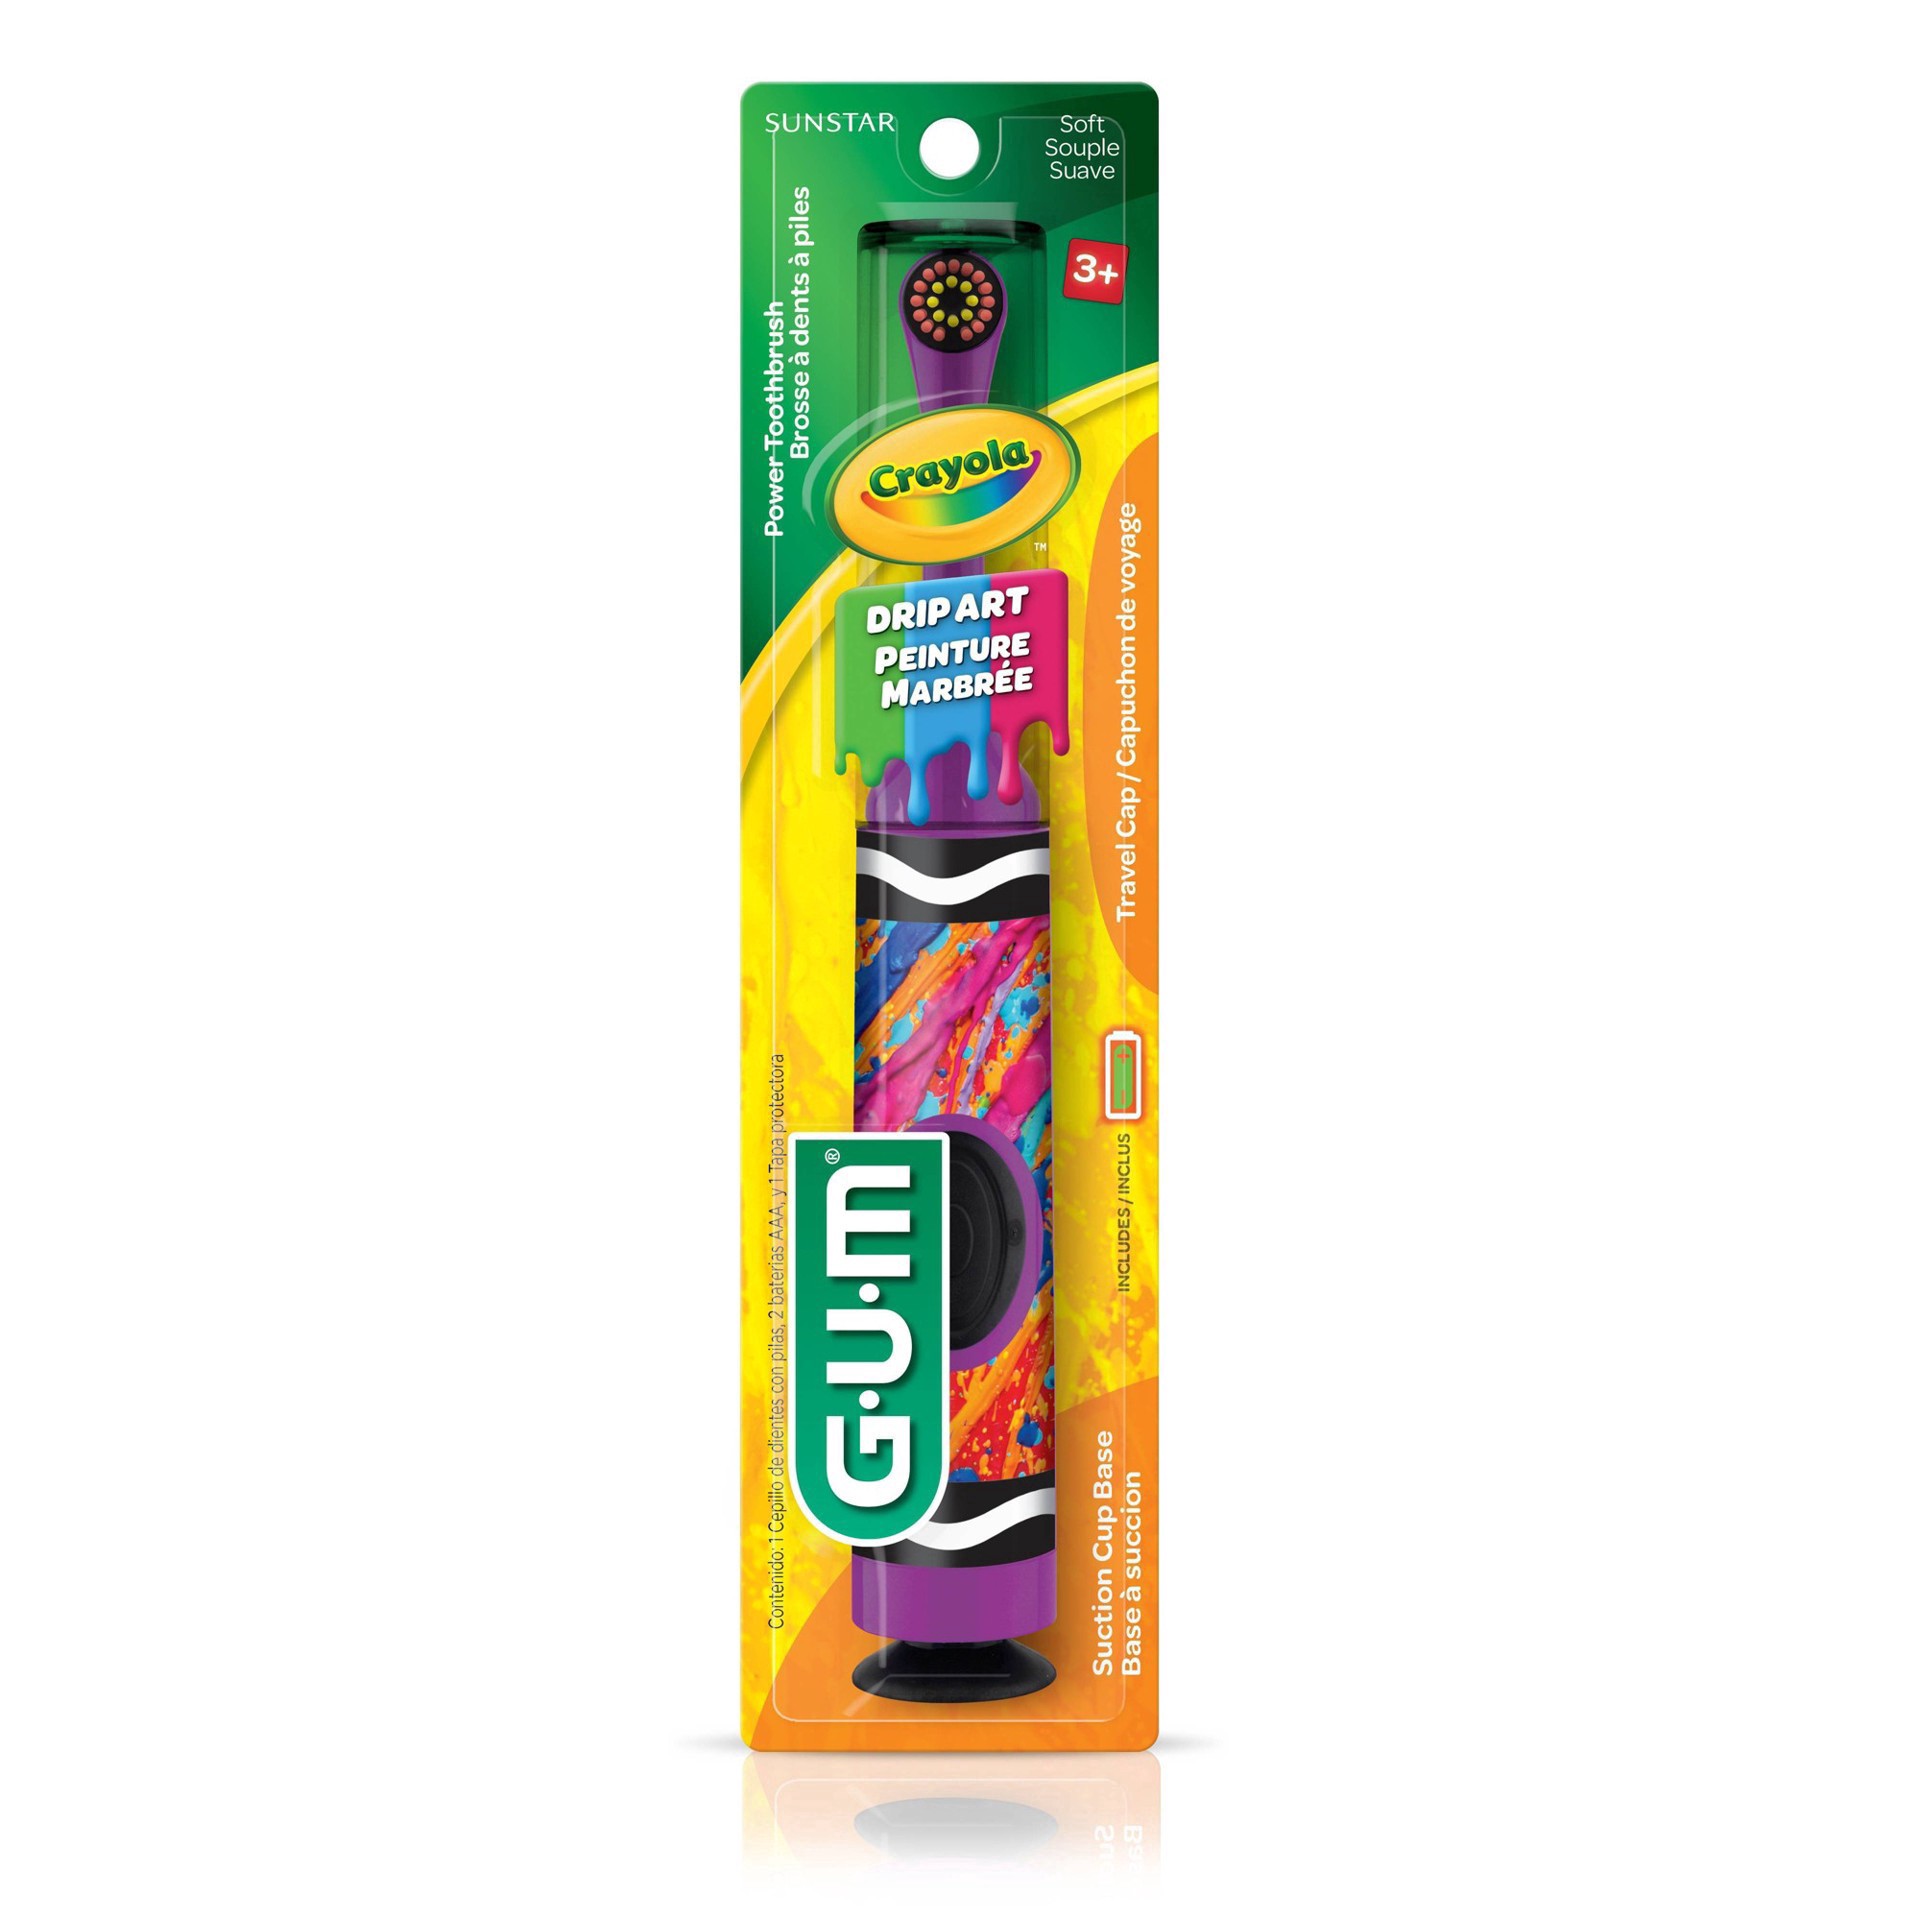 slide 28 of 50, G-U-M Crayola Electric Toothbrush, 1 ct